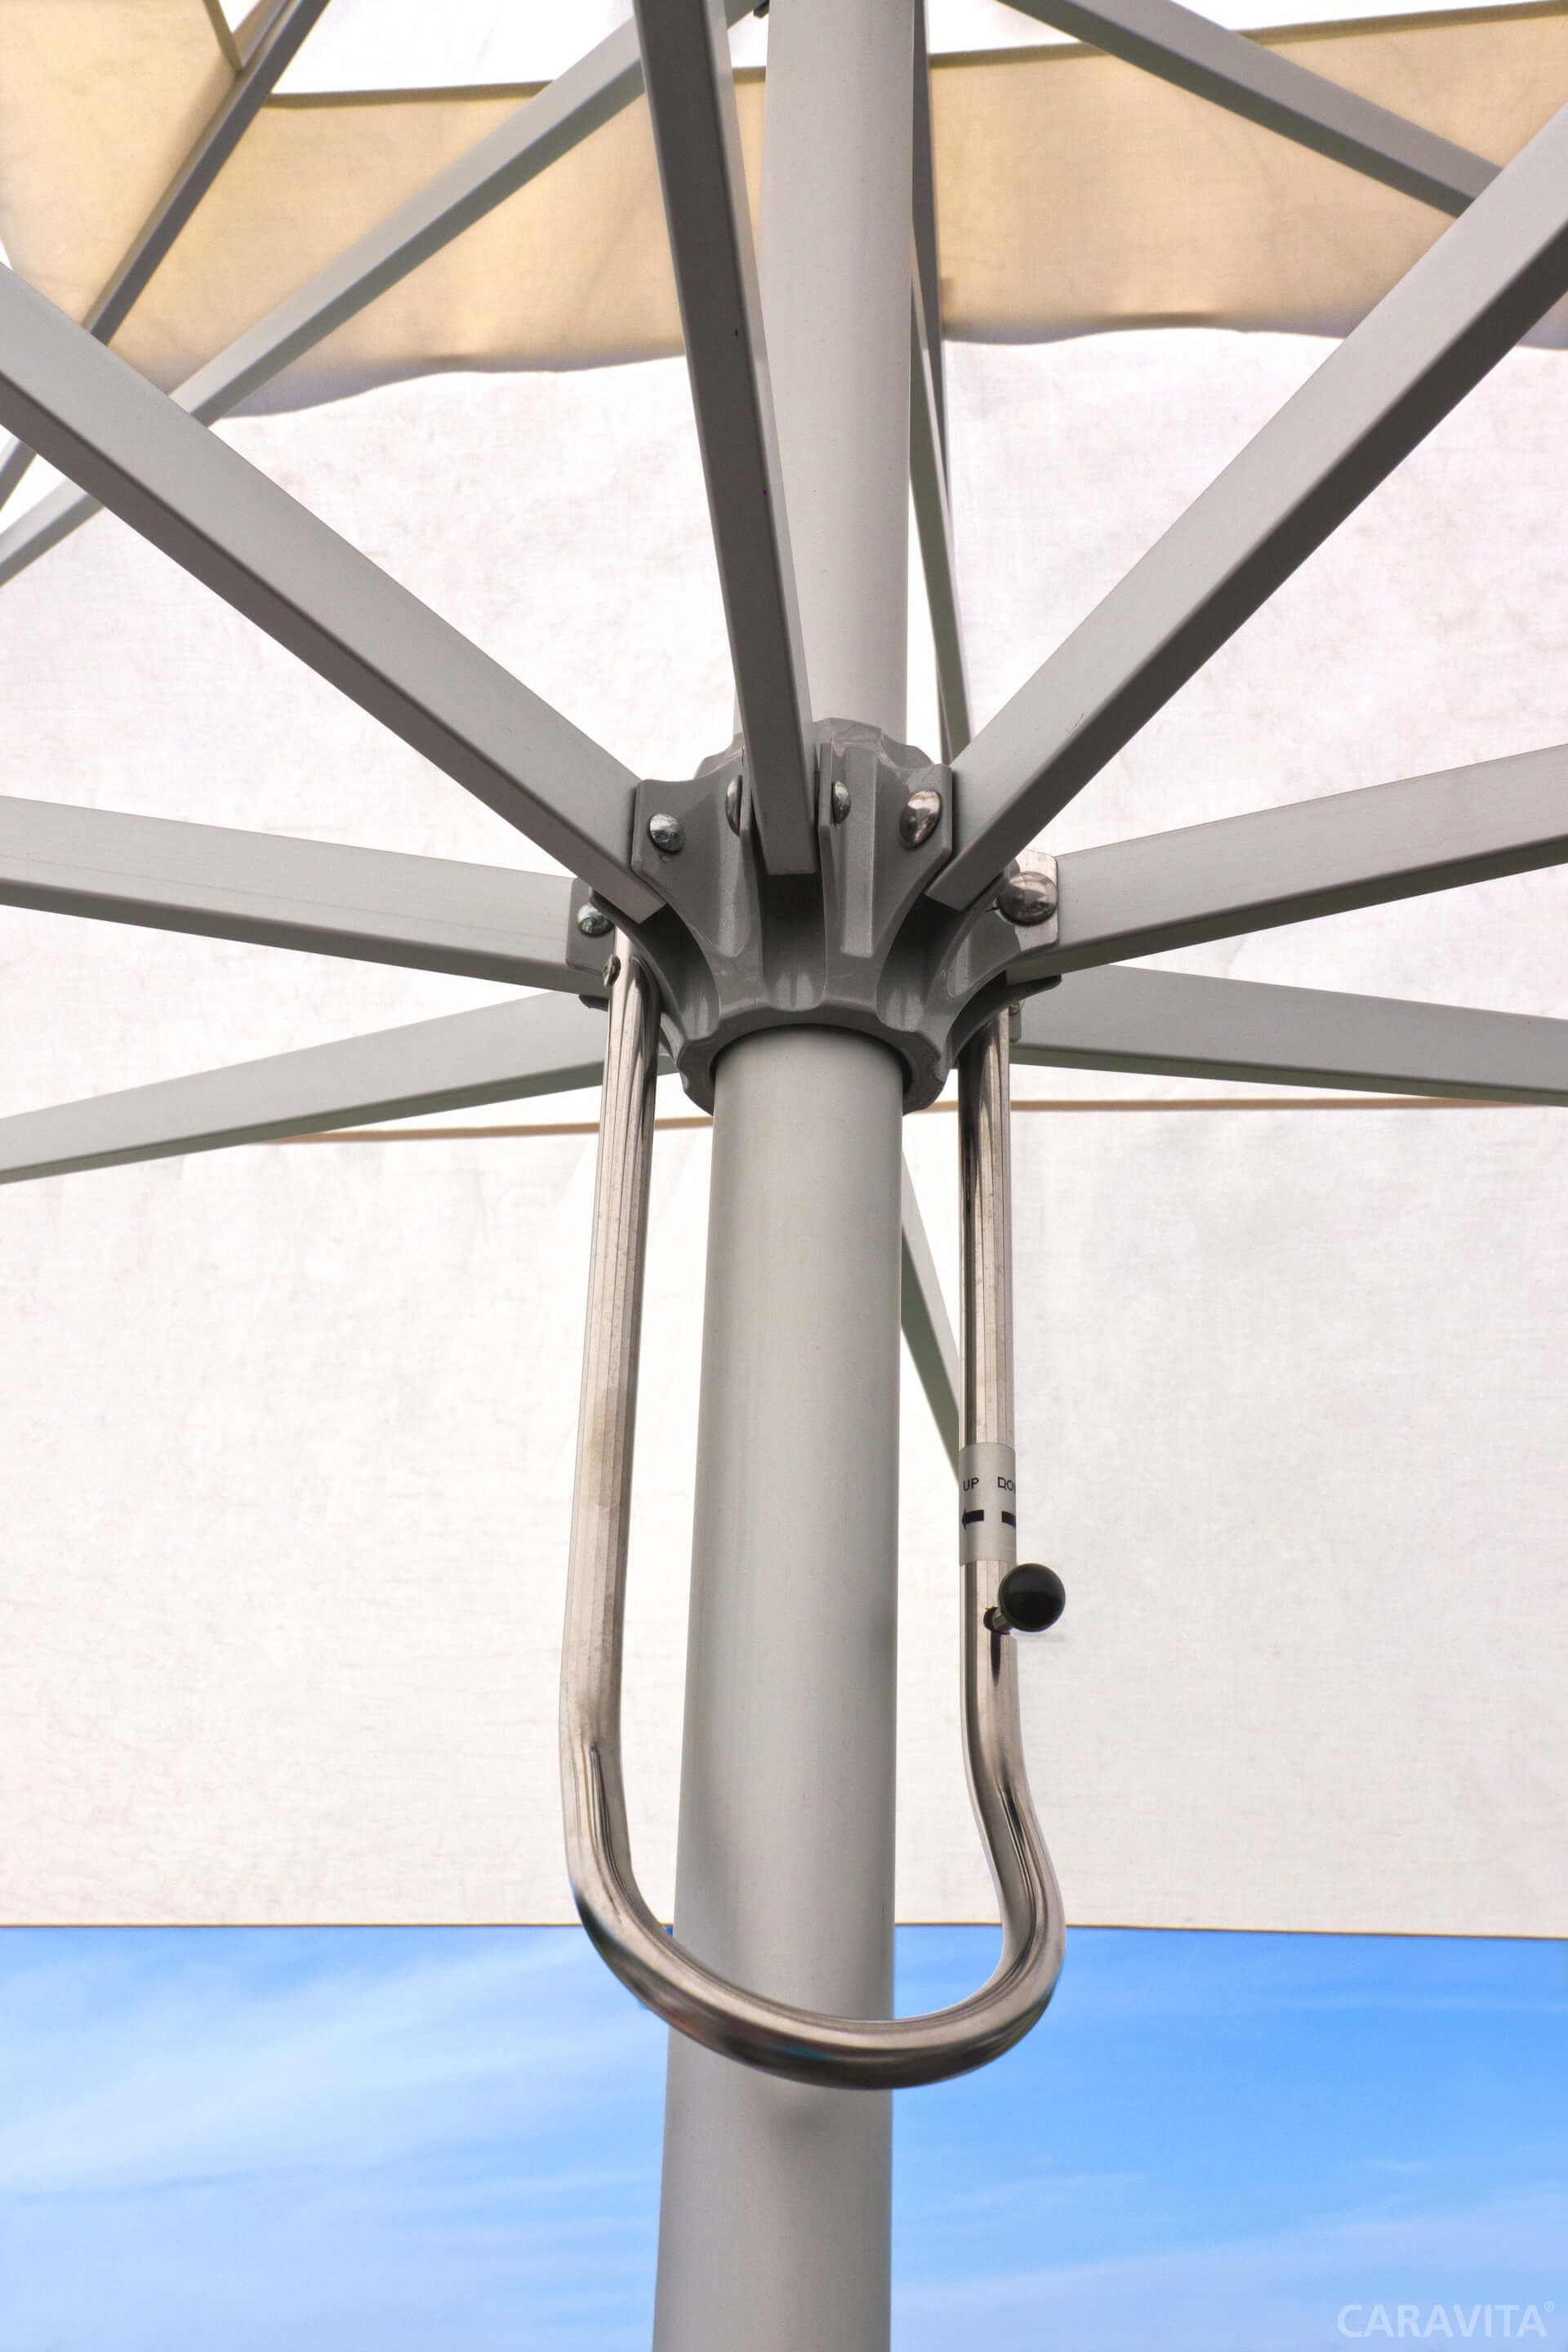 Crank mechanism of a Supremo umbrella from Caravita